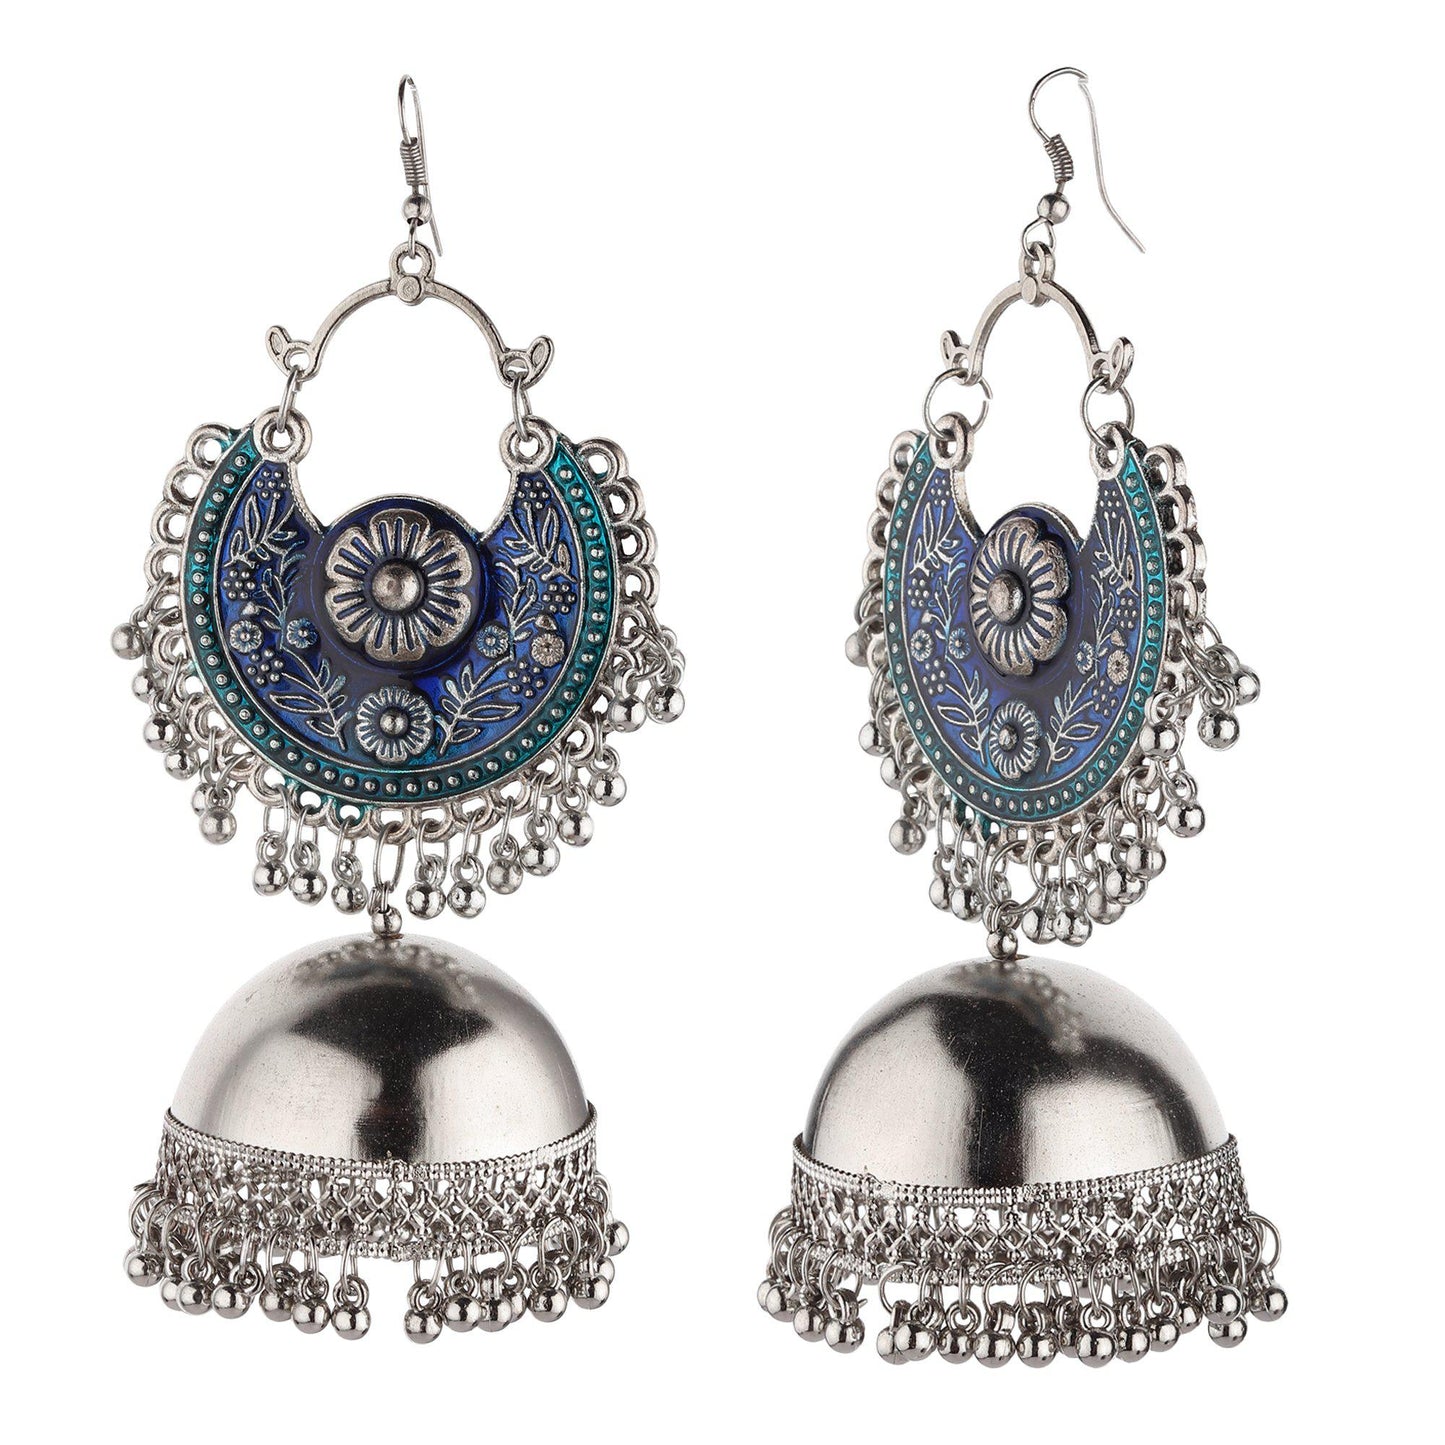 The Intricate Blue Embellished Jhumkas-Earrings-ONESKYSHOP